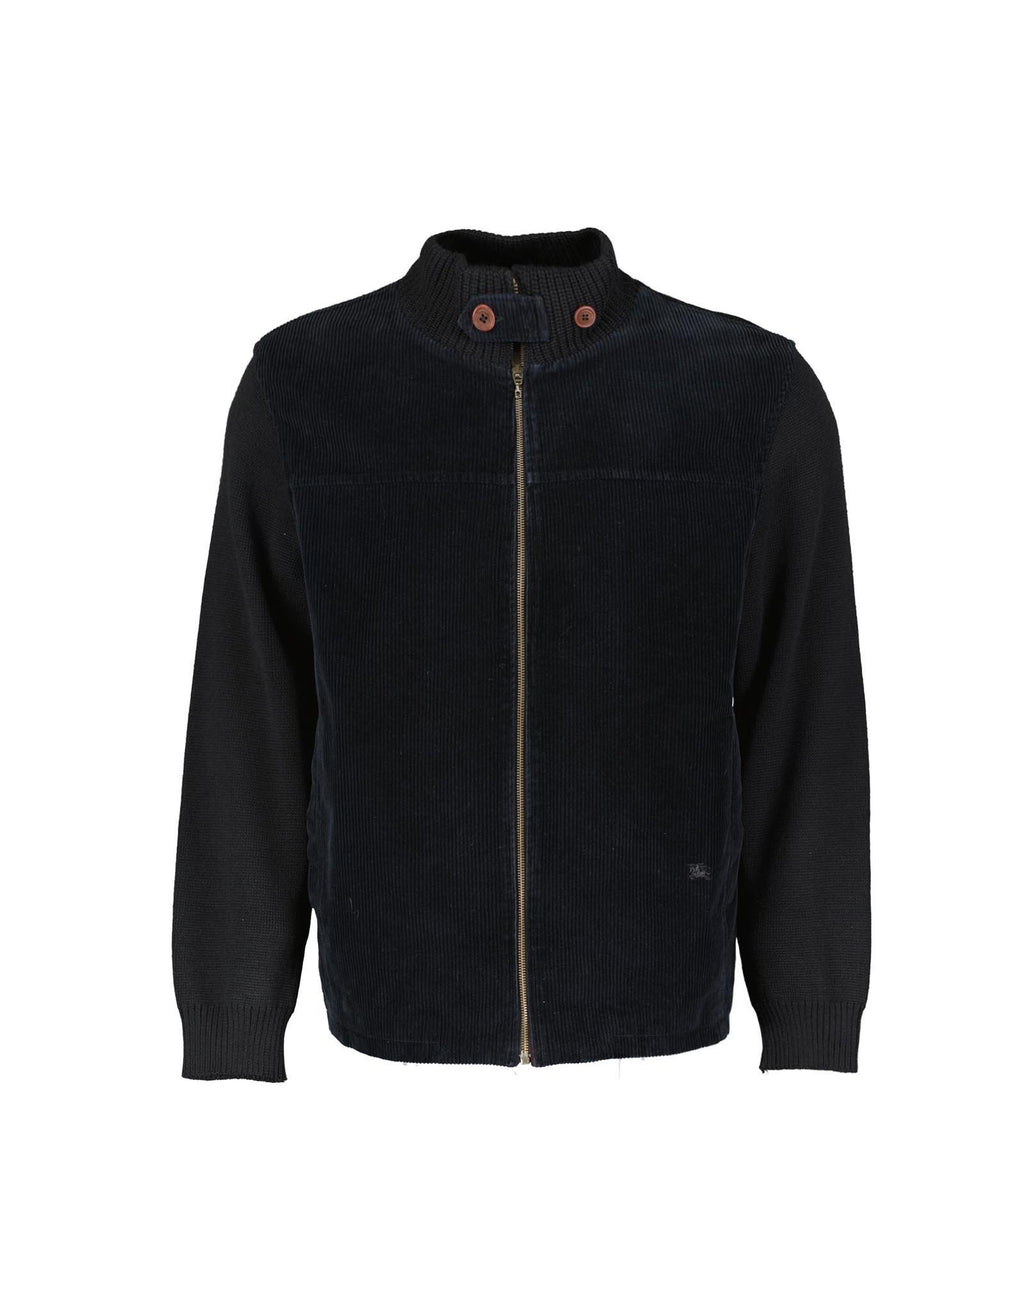 Burberry Zip front Navy Blue Merino Wool Cardigan, Size L